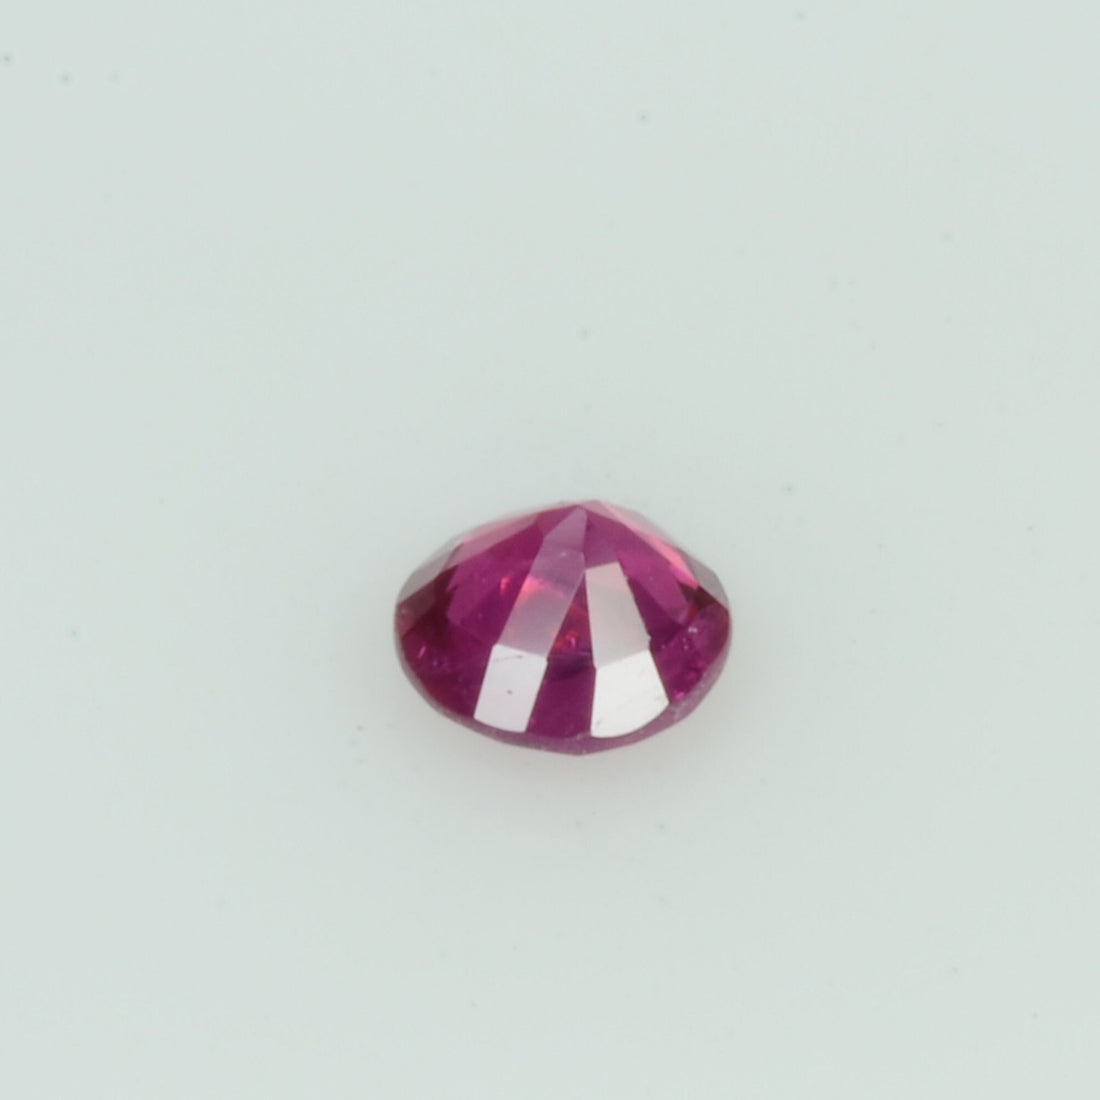 0.23 Cts Natural Burma Ruby Loose Gemstone Round Cut